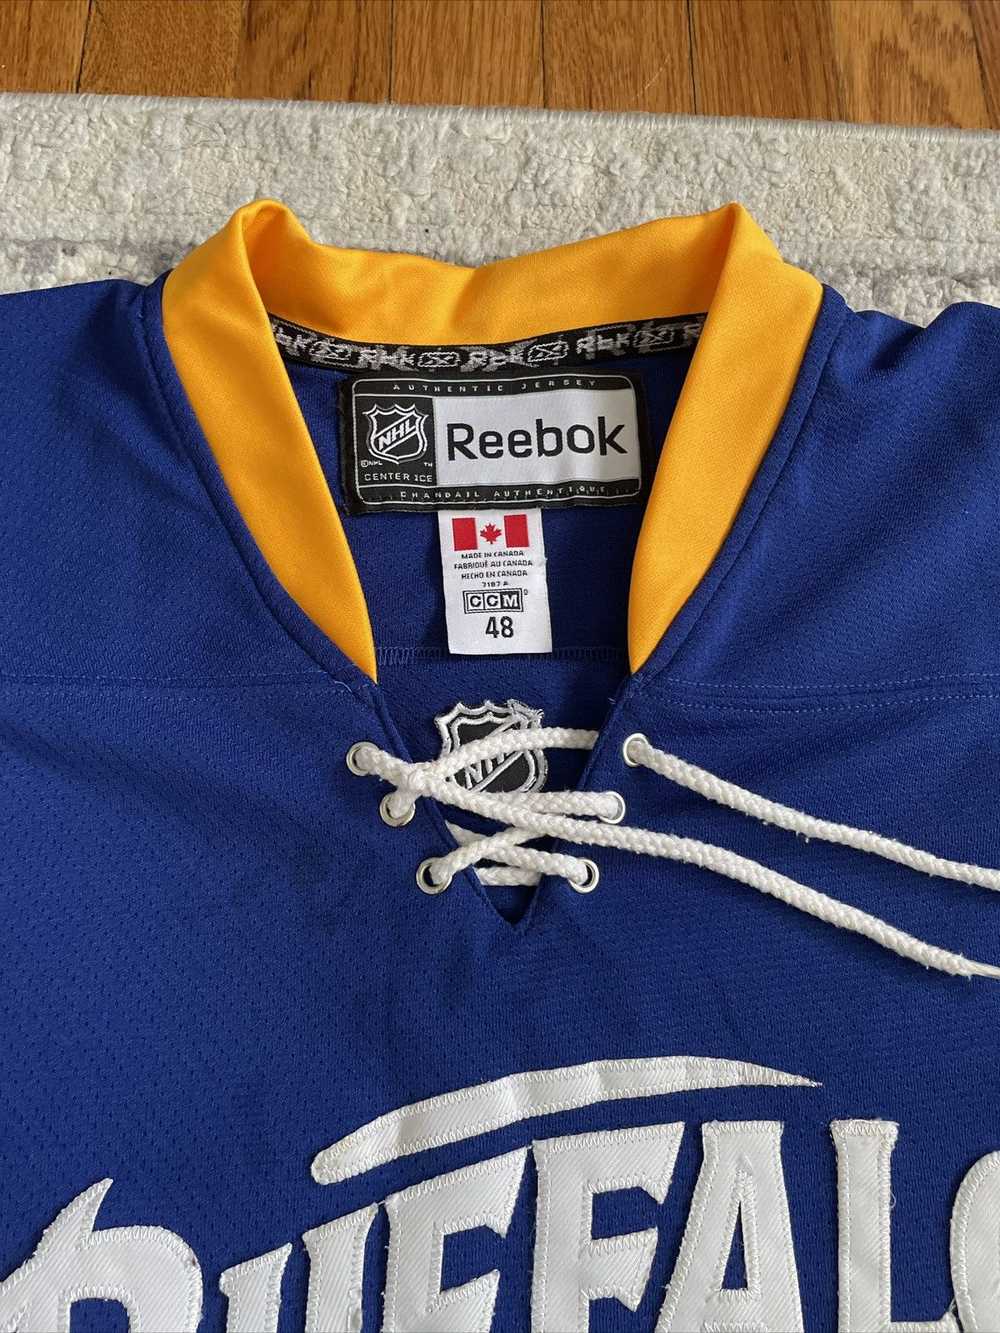 Reebok Hockey Jersey - image 4